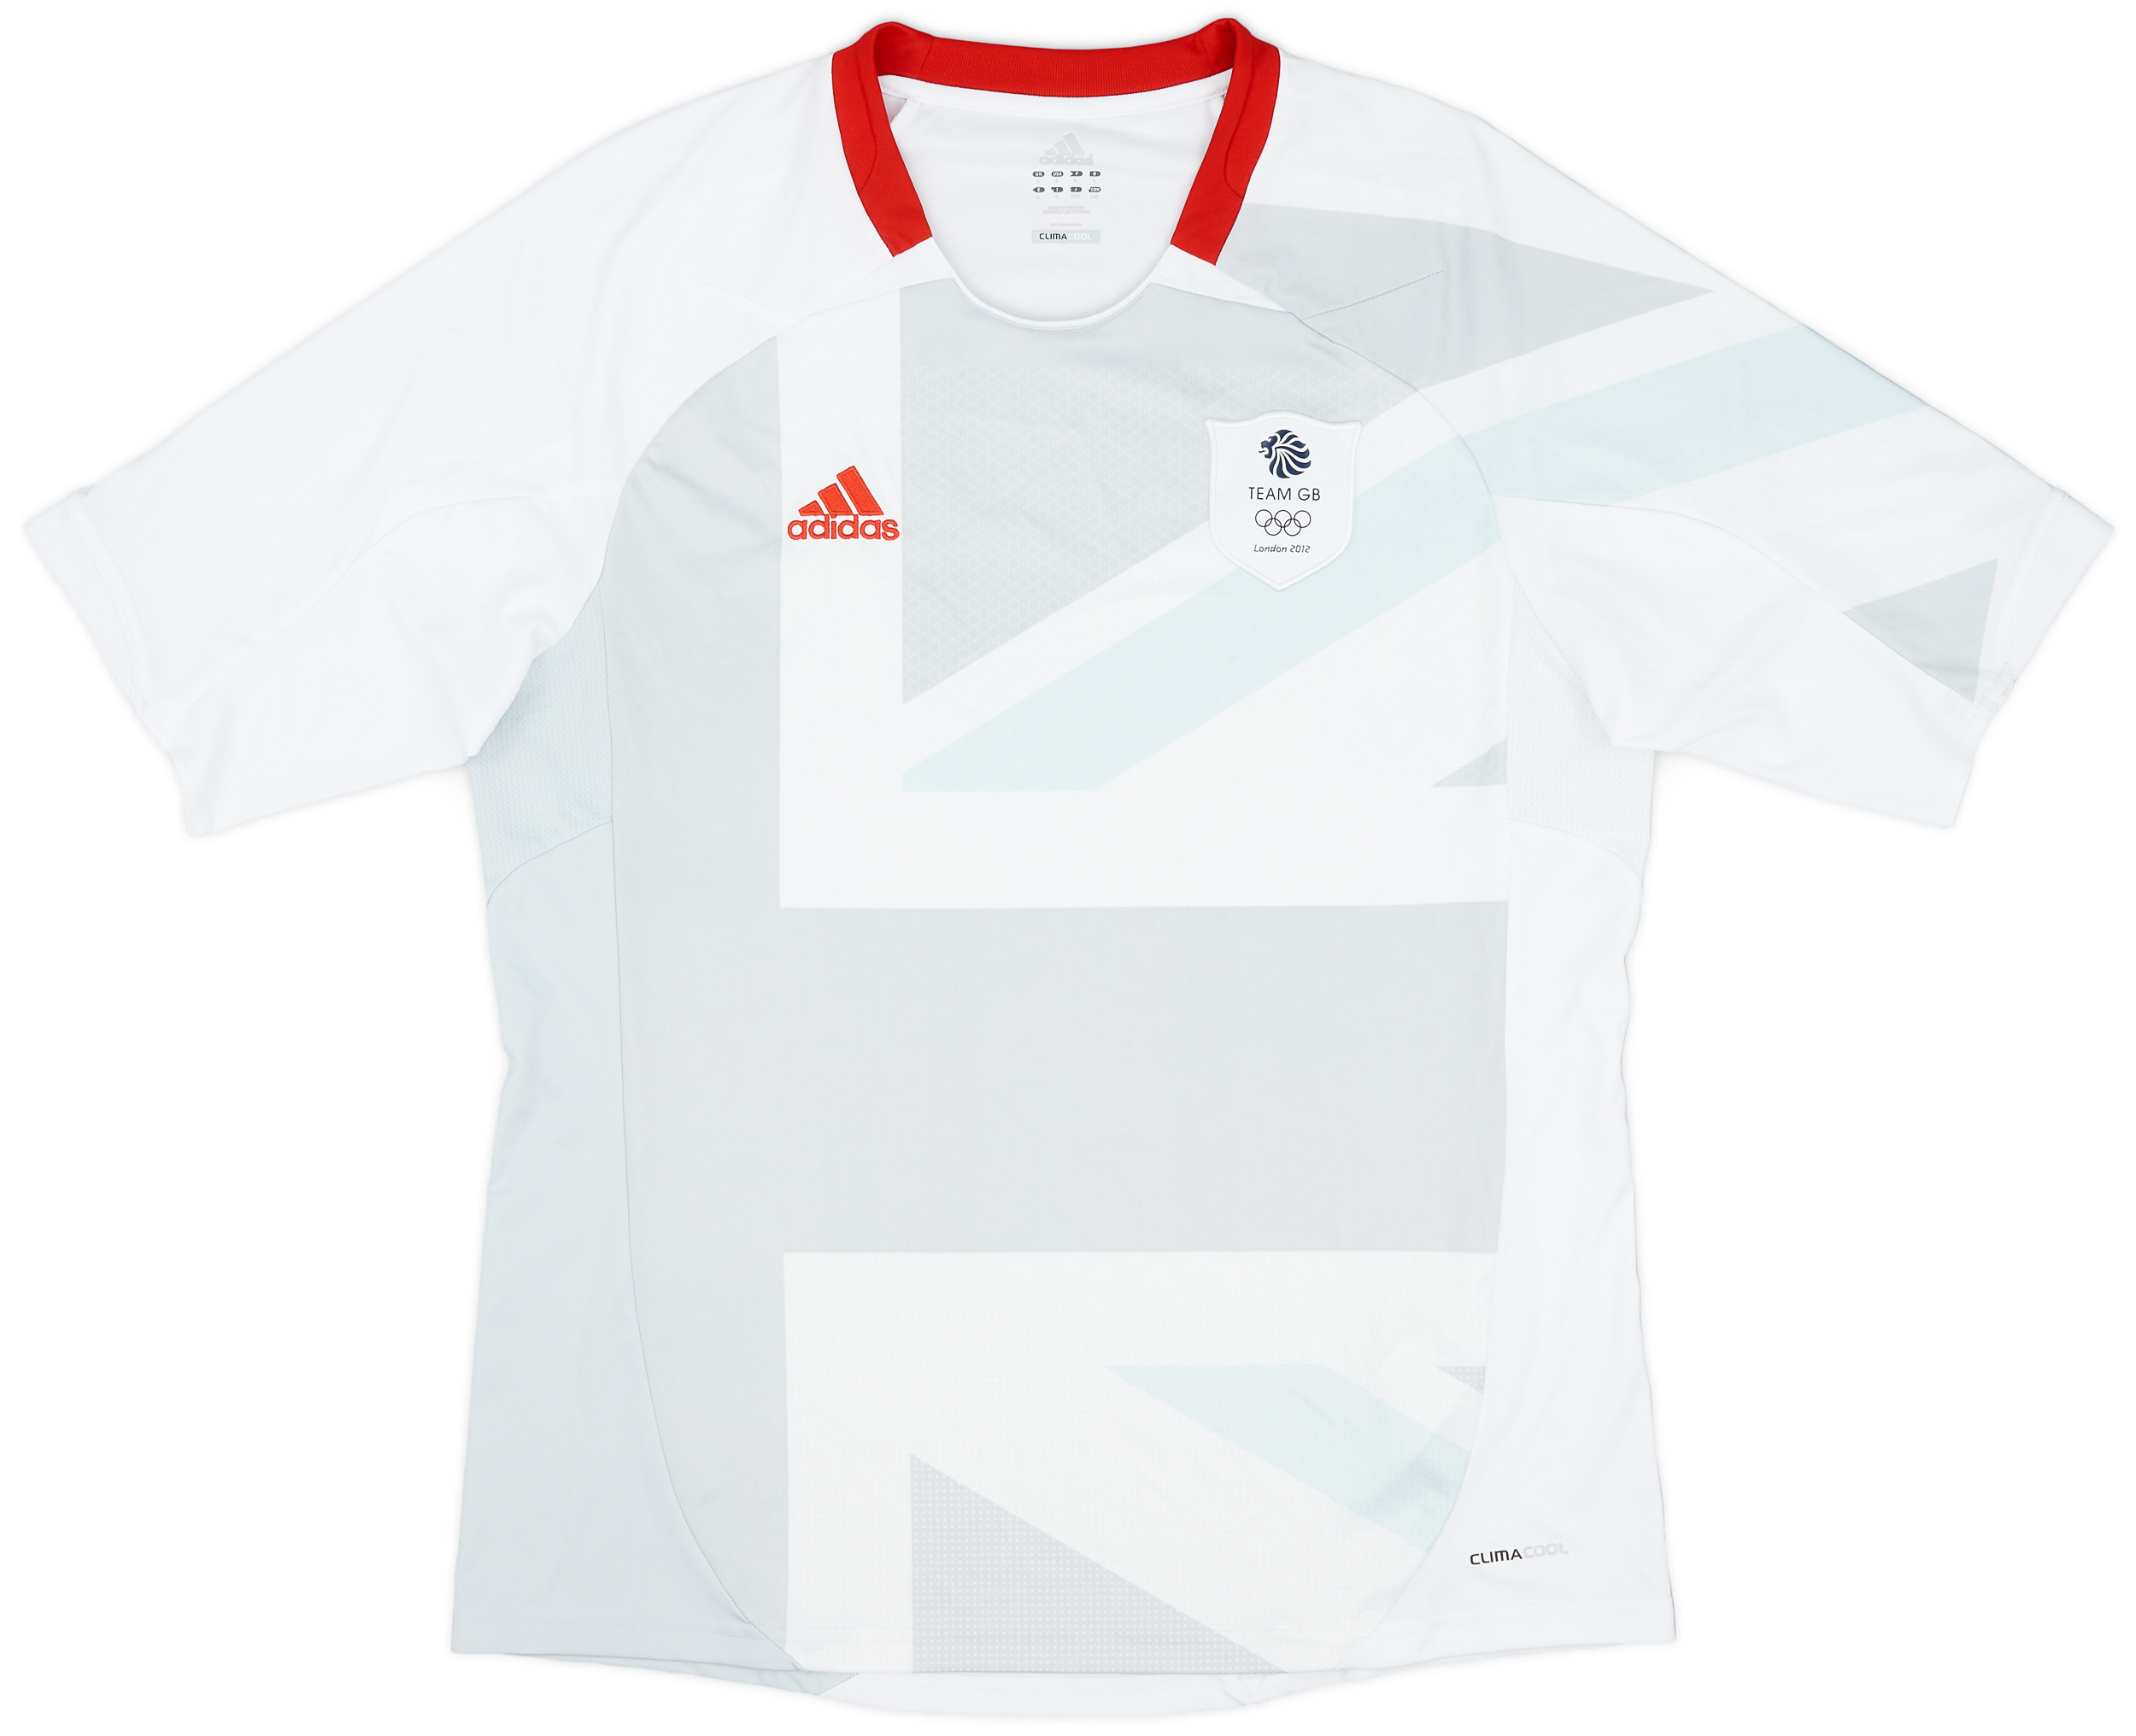 2012 Team GB Olympic Away Shirt - 7/10 - ()